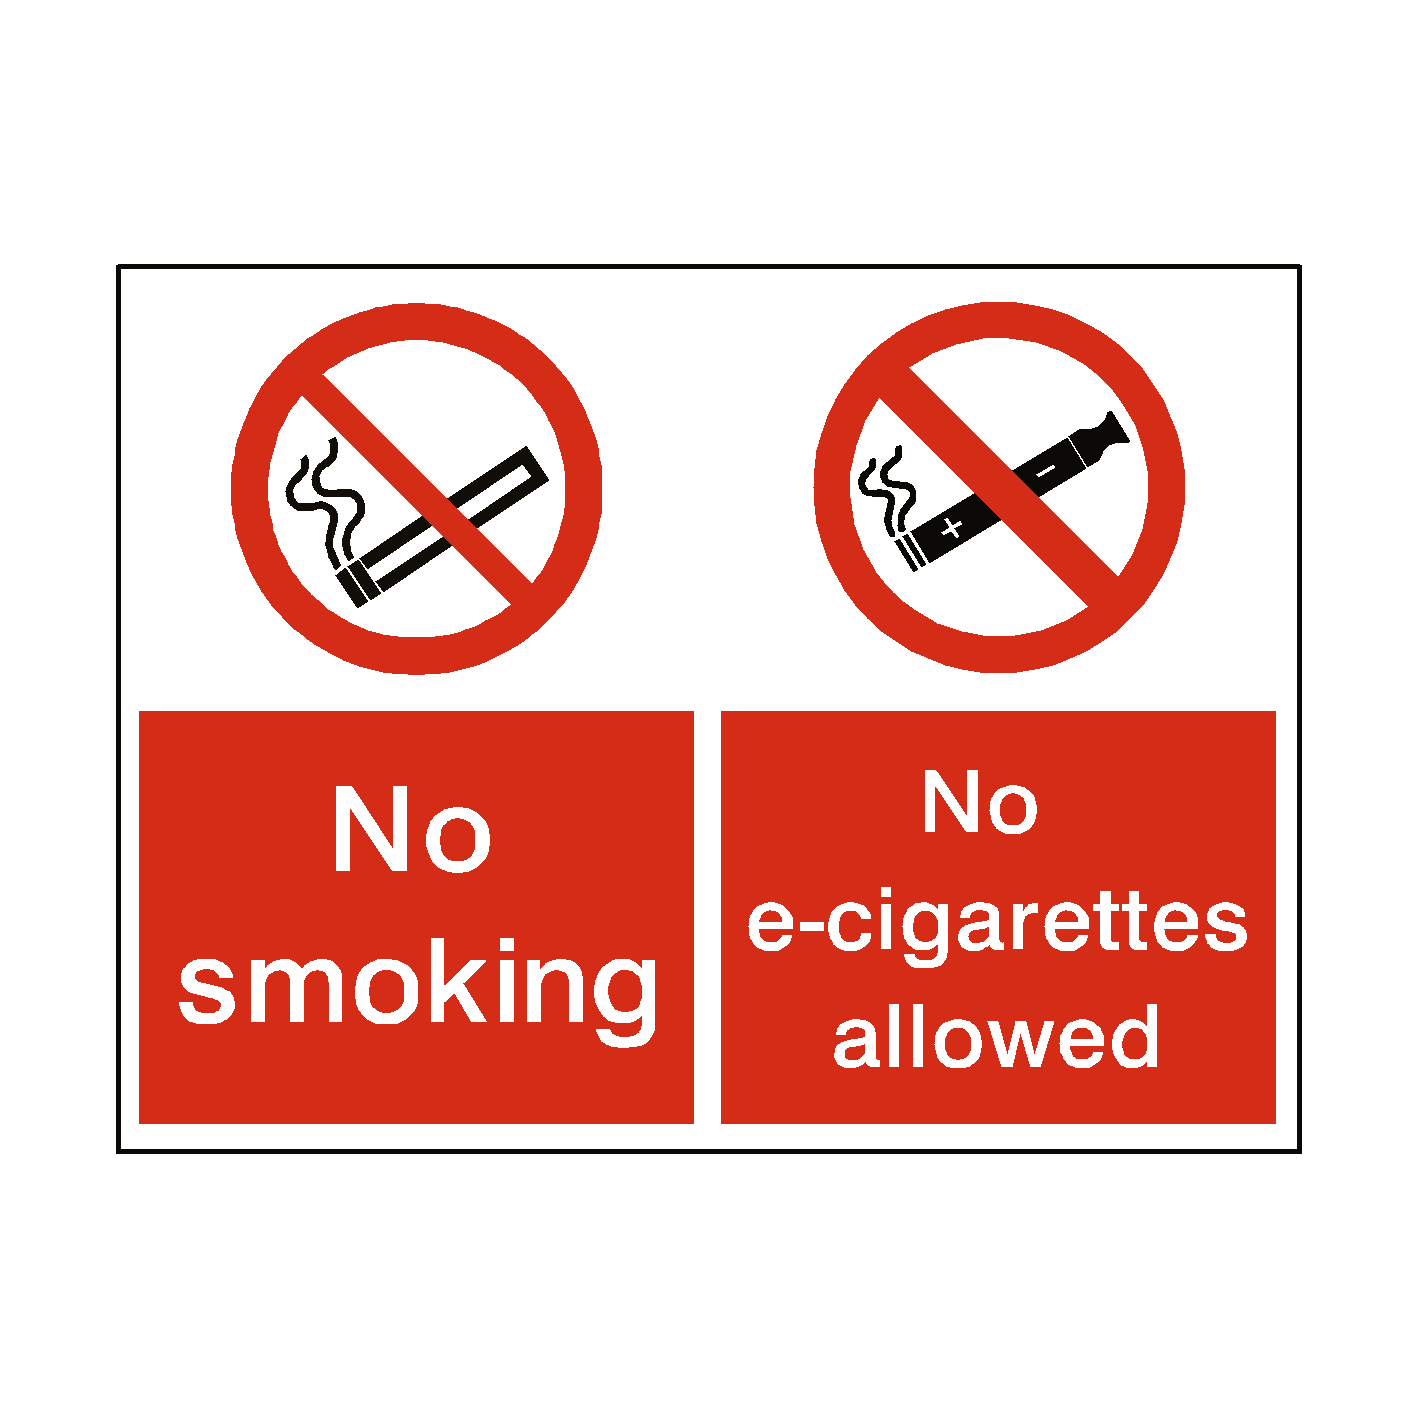 no e-cigarettes and no smoking combined sign 